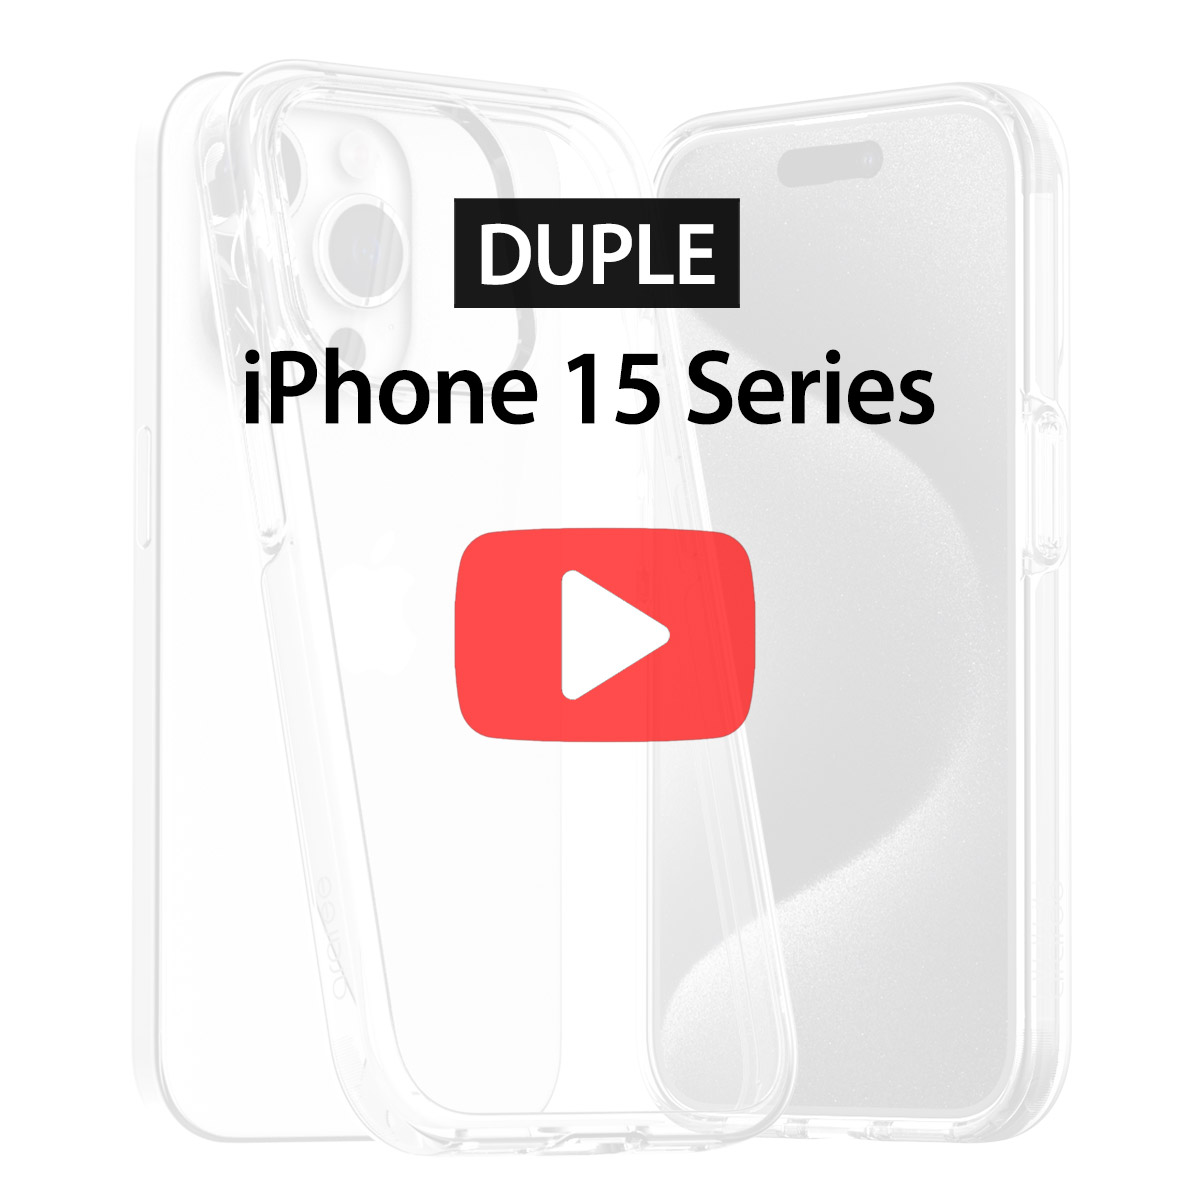 [iPhone 15 Series] DUPLE